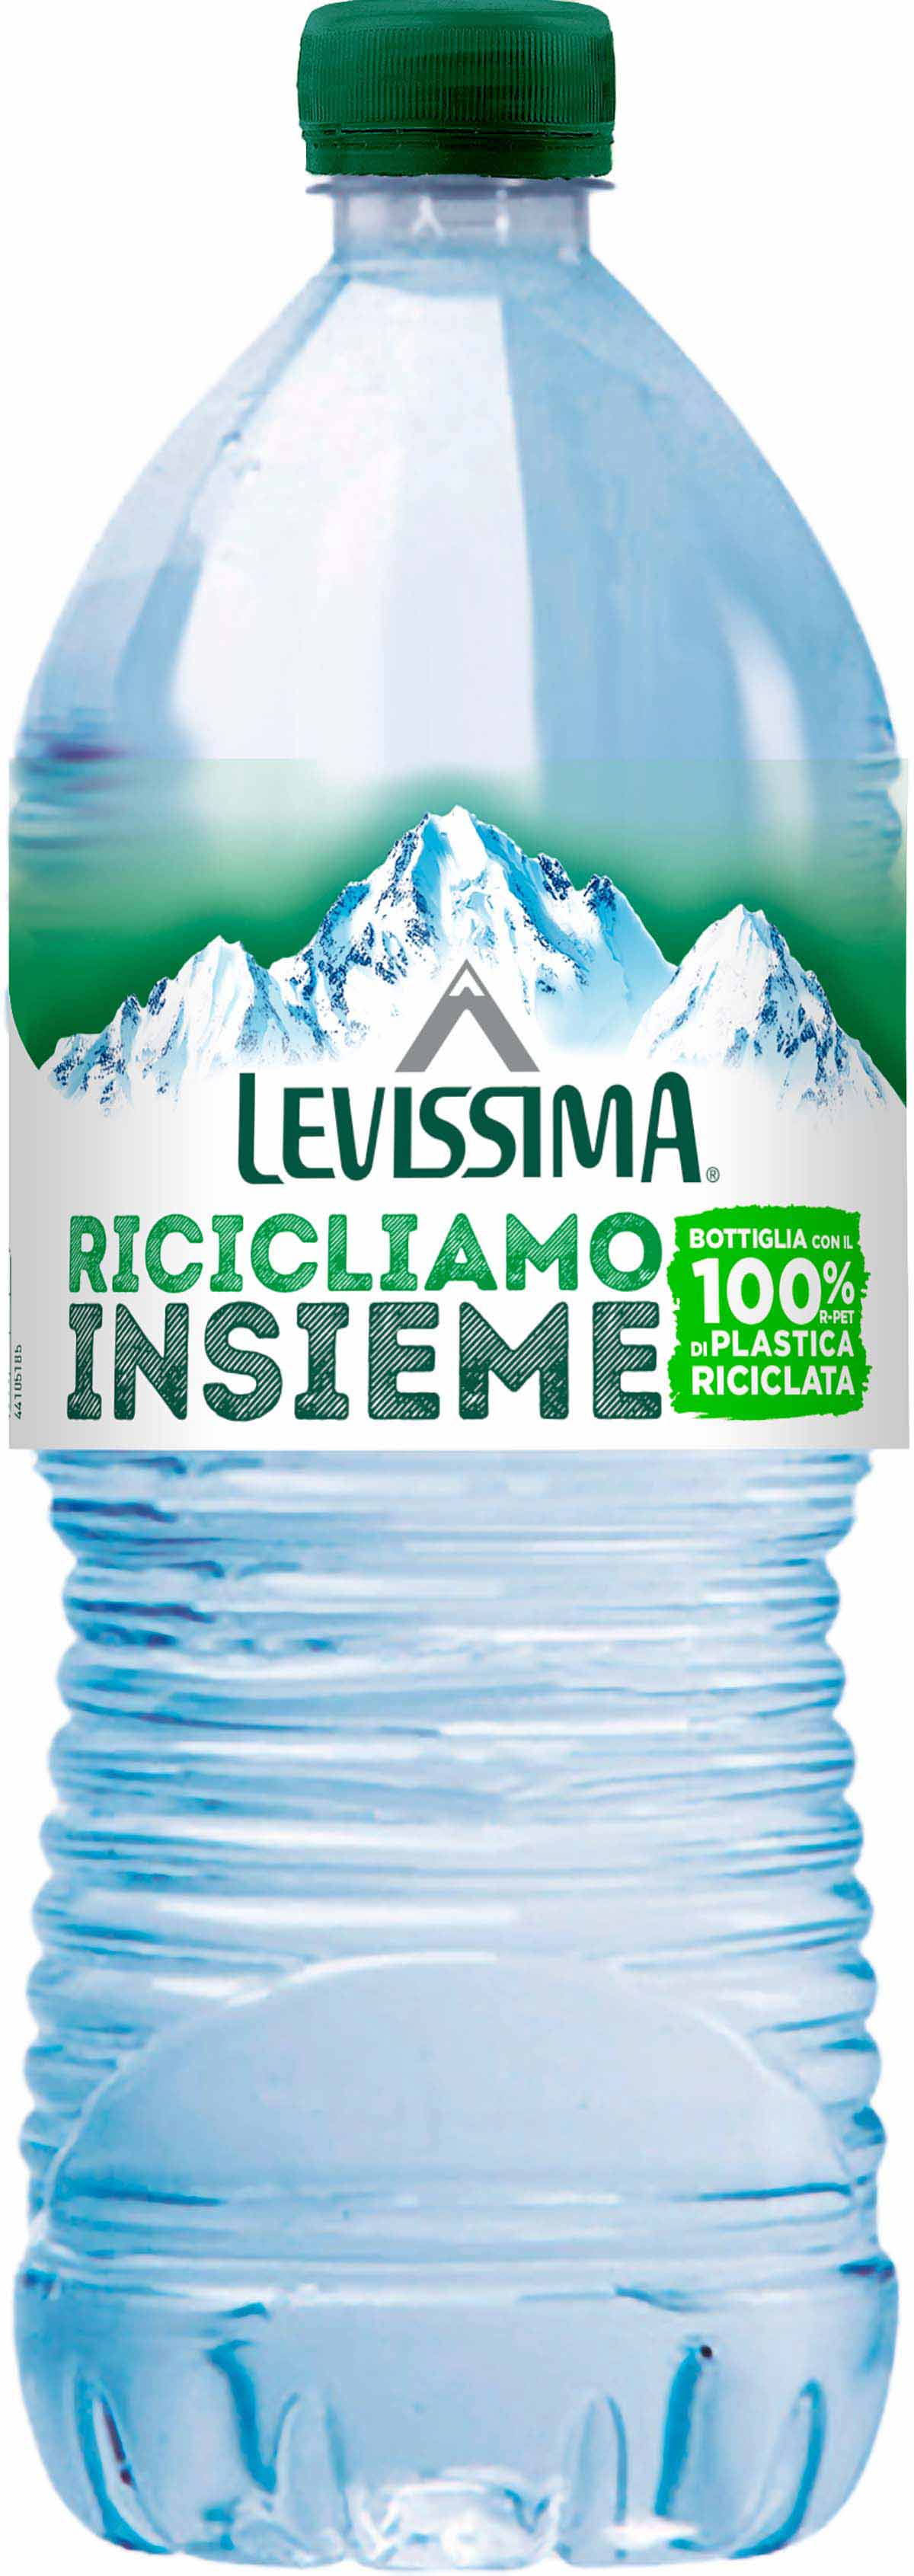 Levissima Acqua Minerale Naturale 1 l 100% RPET - Bottiglia